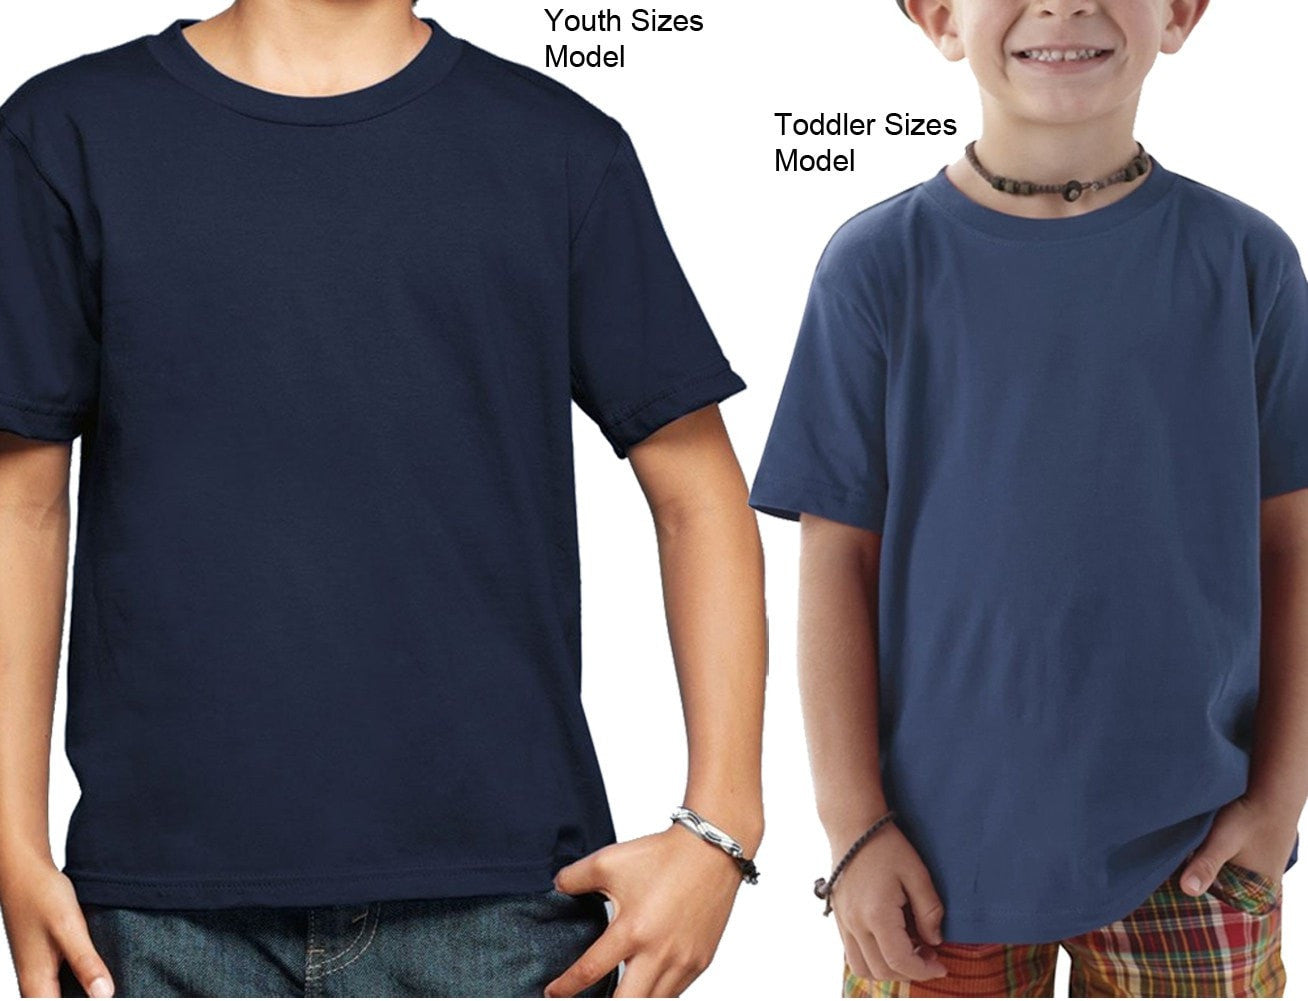 Boy's Pittsburgh 412 Area Code T-Shirt